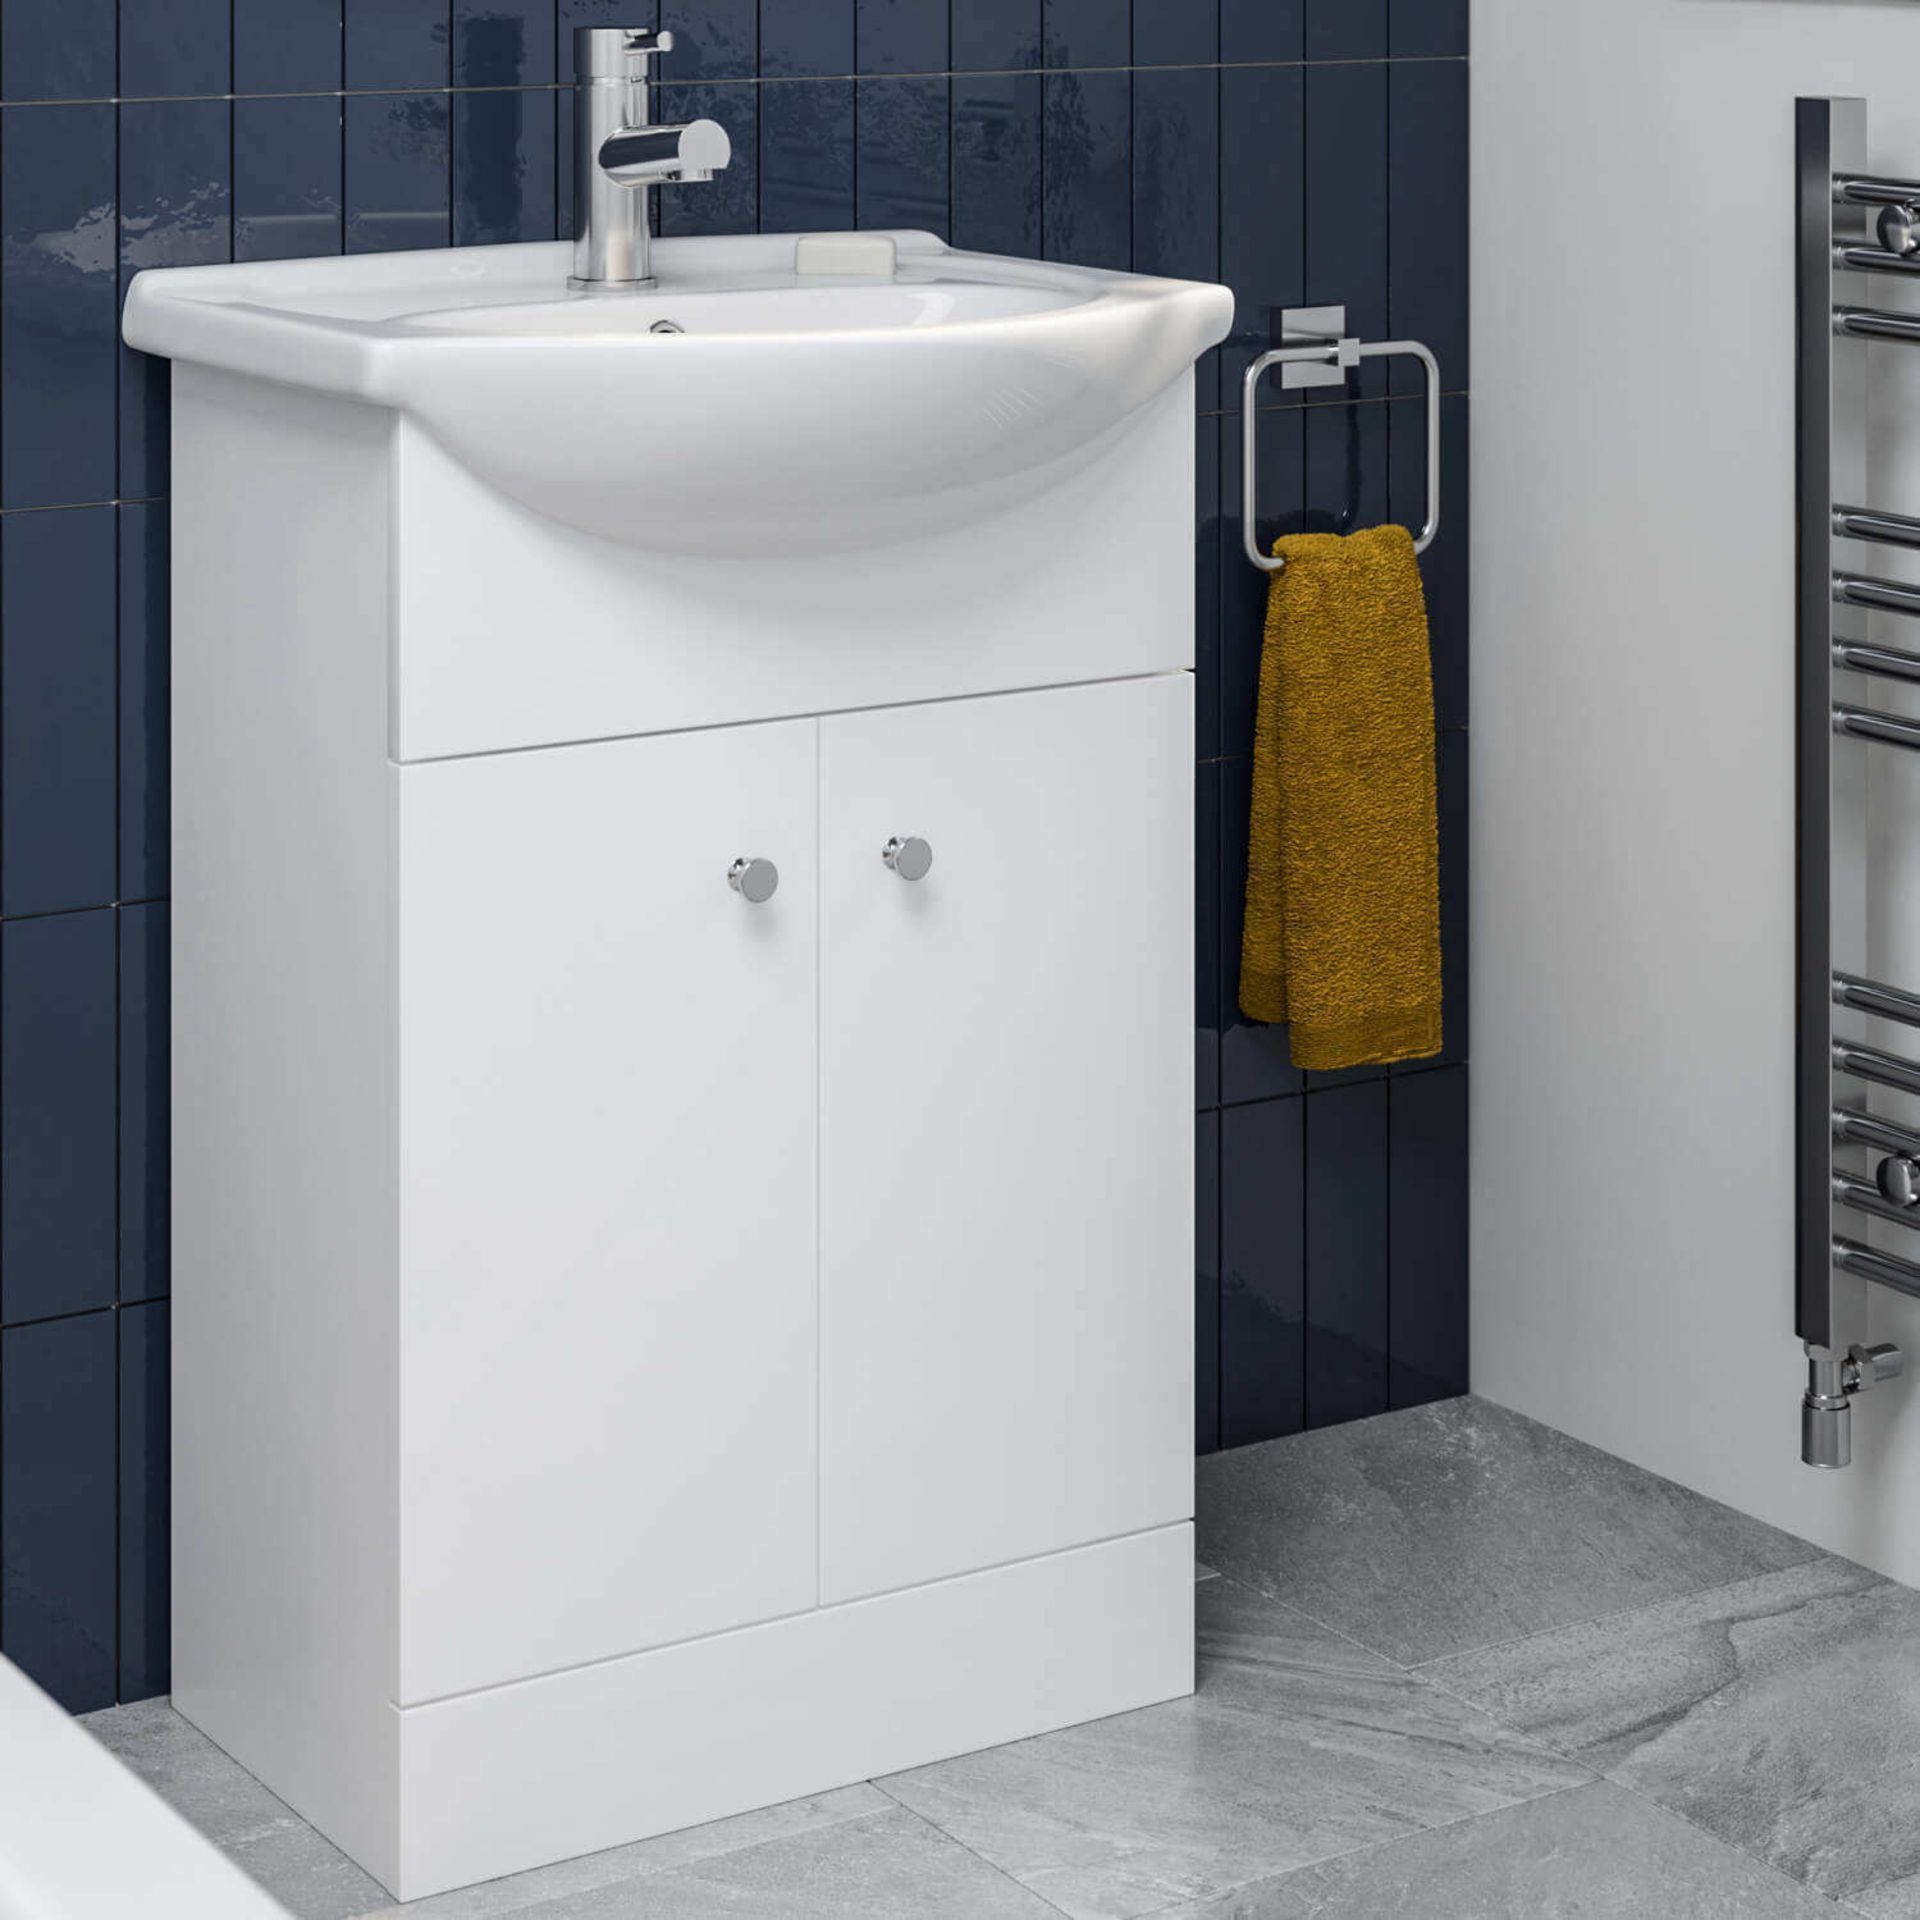 NEW & BOXED 550mm Quartz Basin Sink Vanity Unit Fl - Image 2 of 2